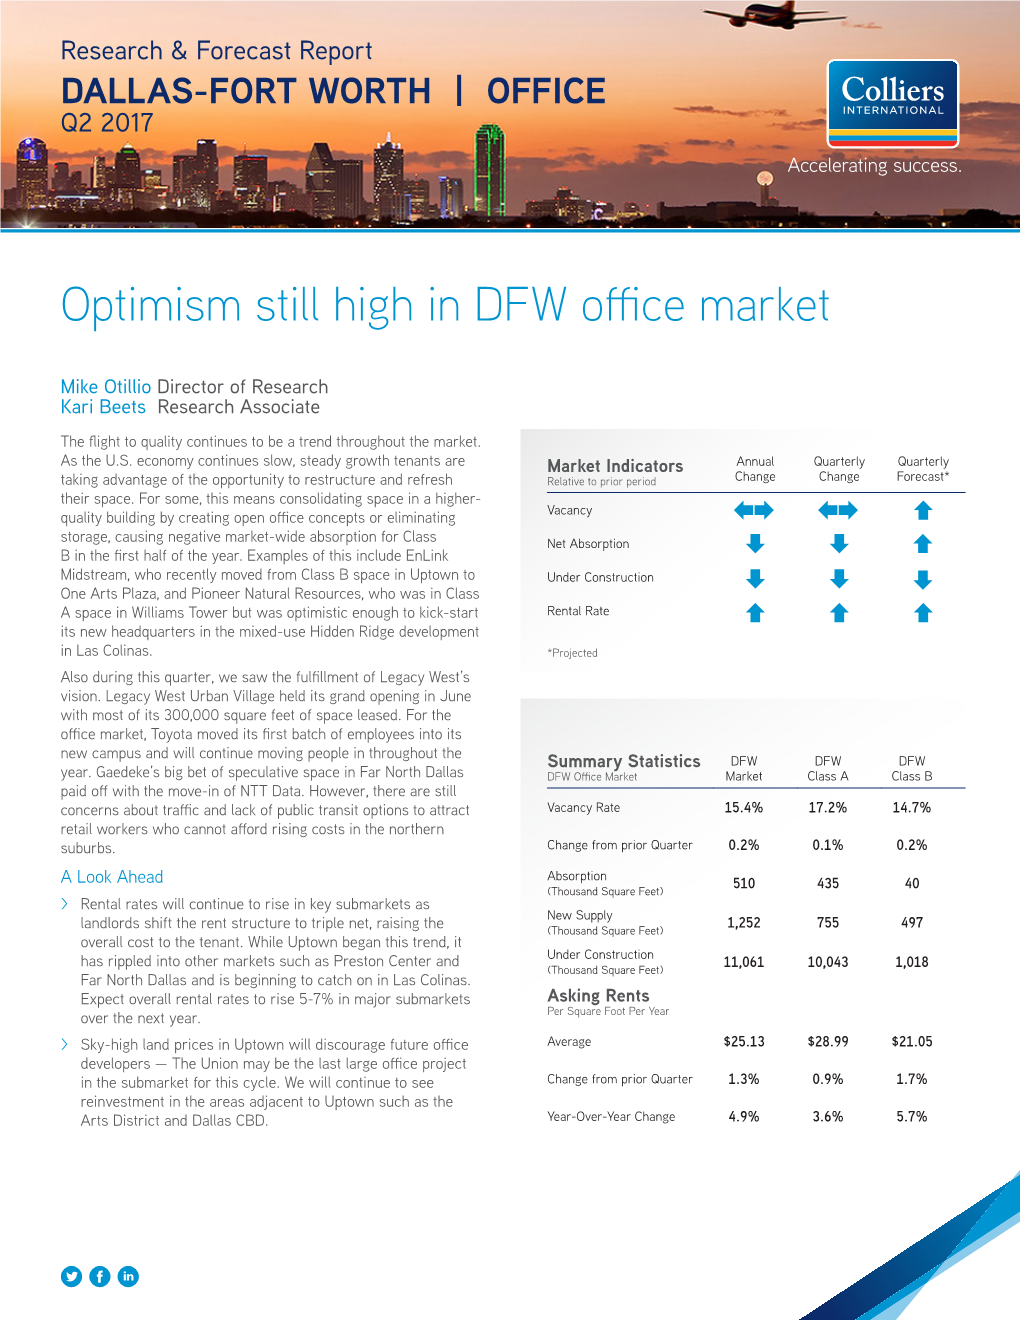 Optimism Still High in DFW Office Market